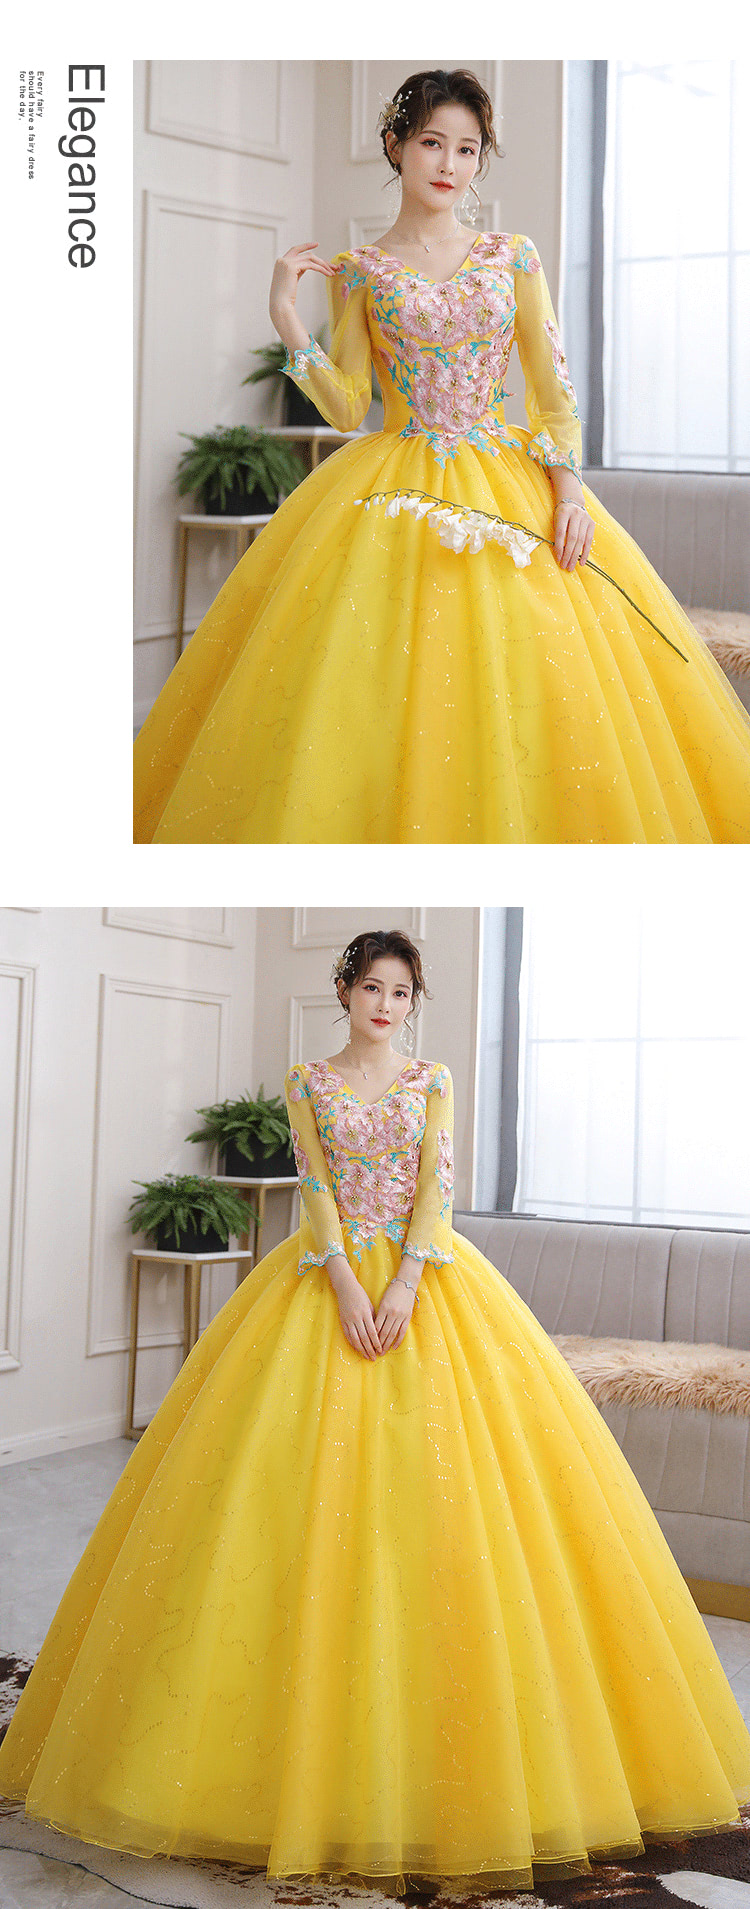 Golden-Embroidery-Puffy-Skirt-Gauze-Wedding-Evening-Party-Dress12